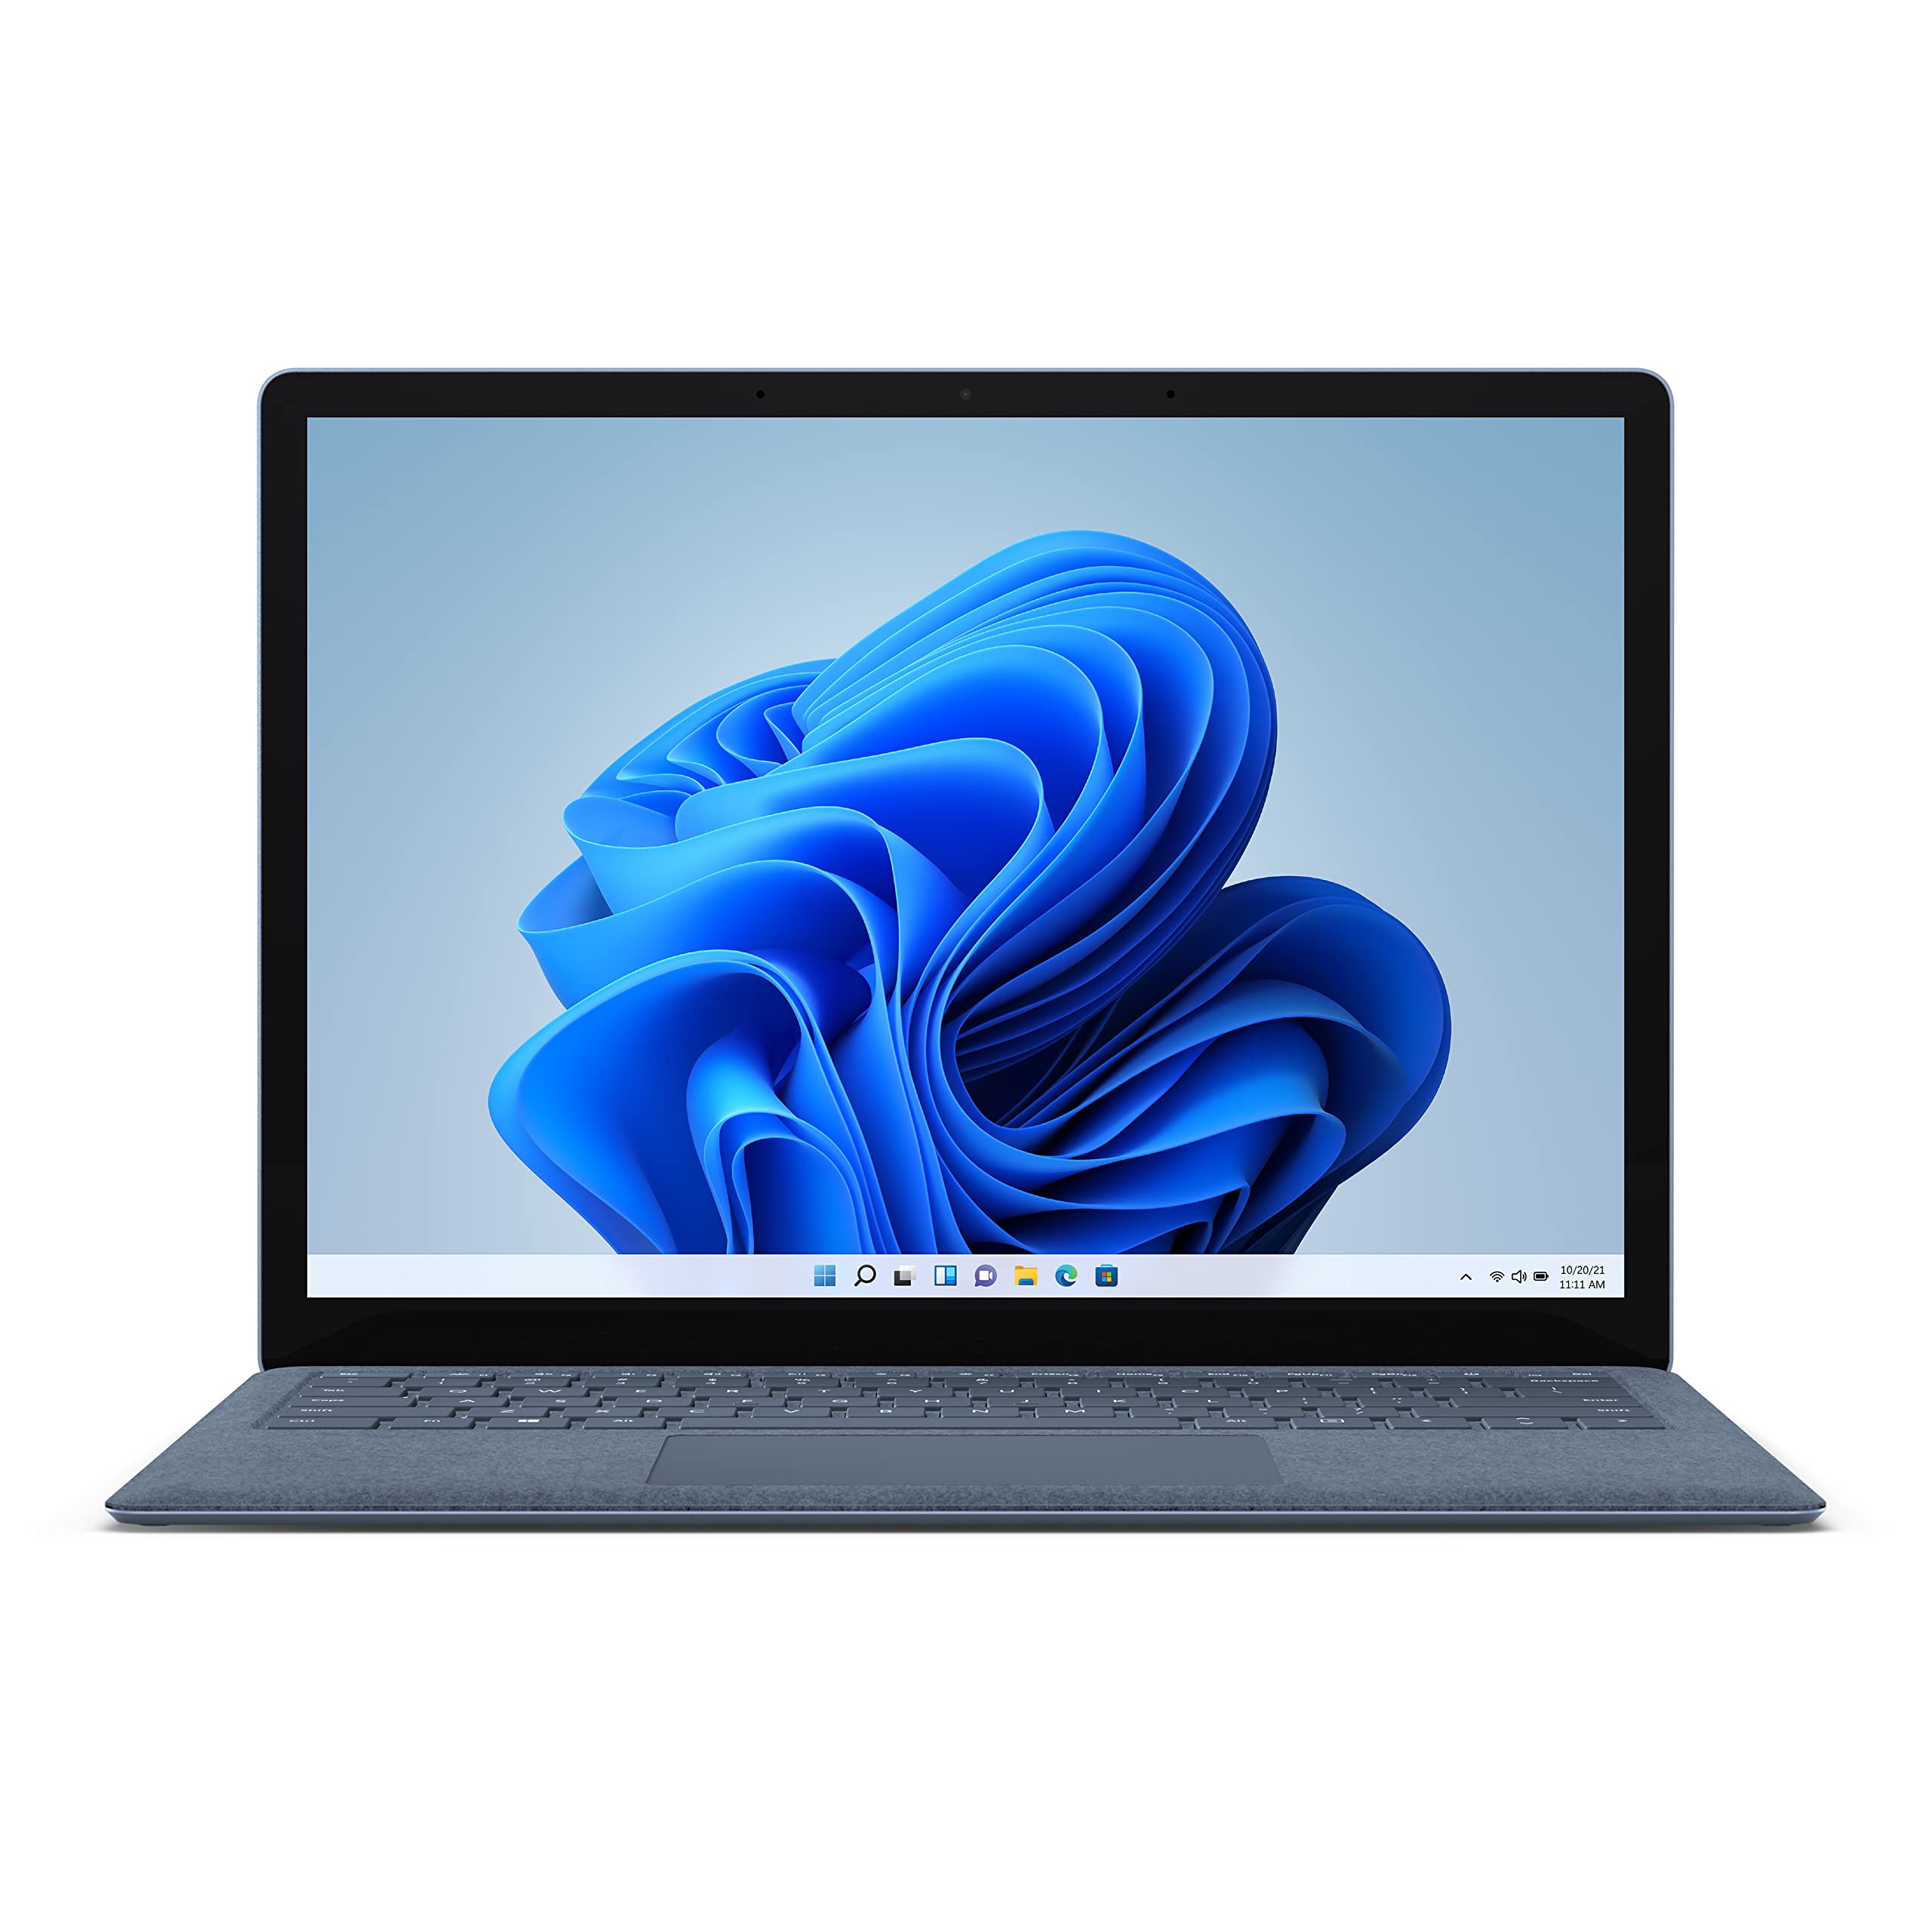 Microsoft Surface Laptop 4 - Intel Core i5 1145G7 - Win 10 Pro - Iris Xe Graphics - 16 GB RAM - 512 GB SSD - 13.5" pantalla táctil 2256 x 1504 - Wi-Fi 6 - platino - comercial - 5B2-00037